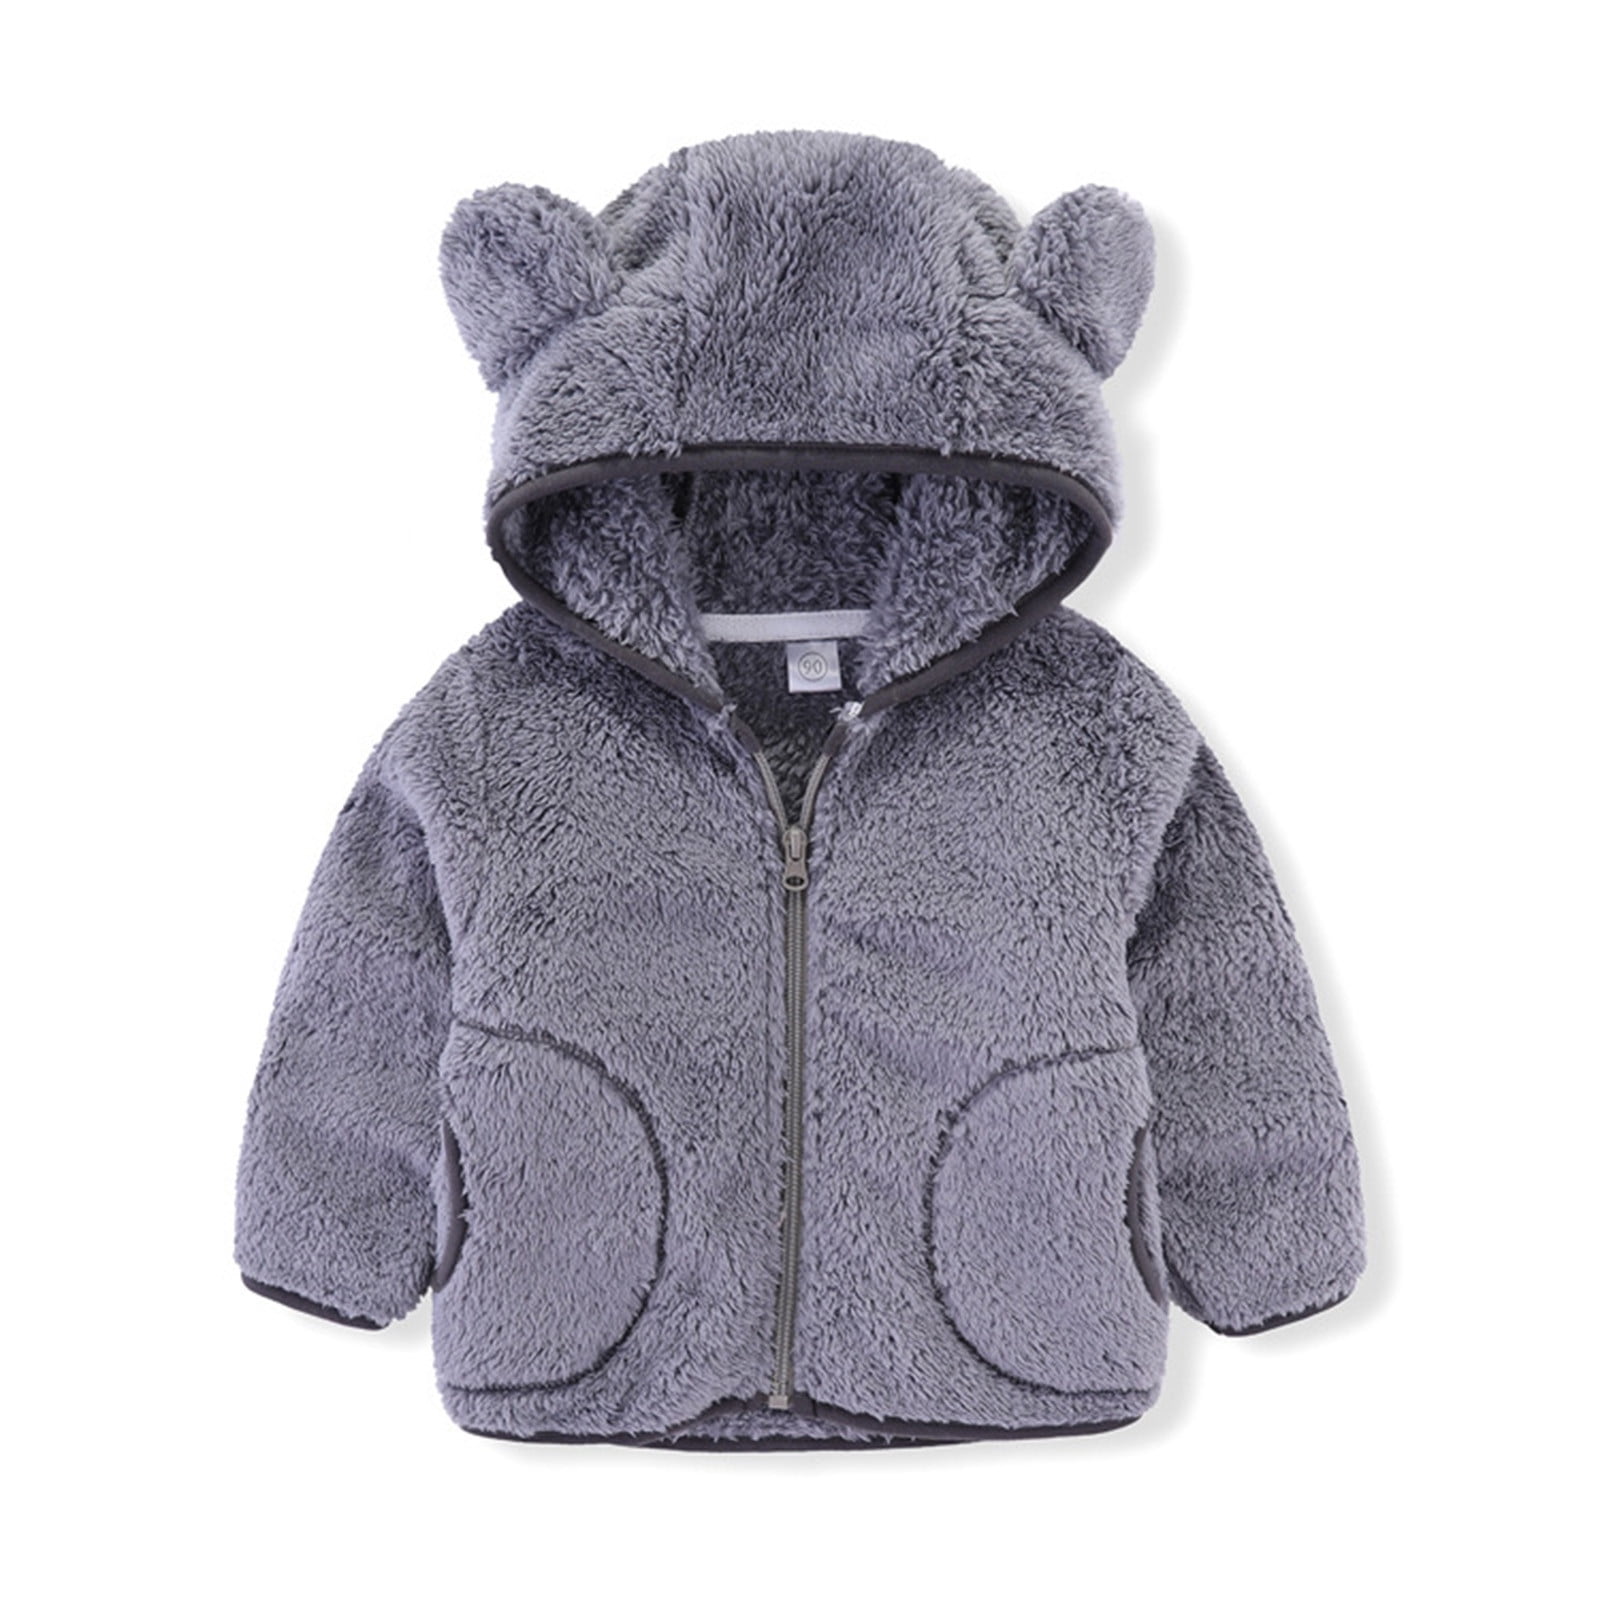 JiAmy Baby Kids Fleece Jackets Polar Coats Cartoon Outterwear Spring Autumn Outfits for 1-6 Years